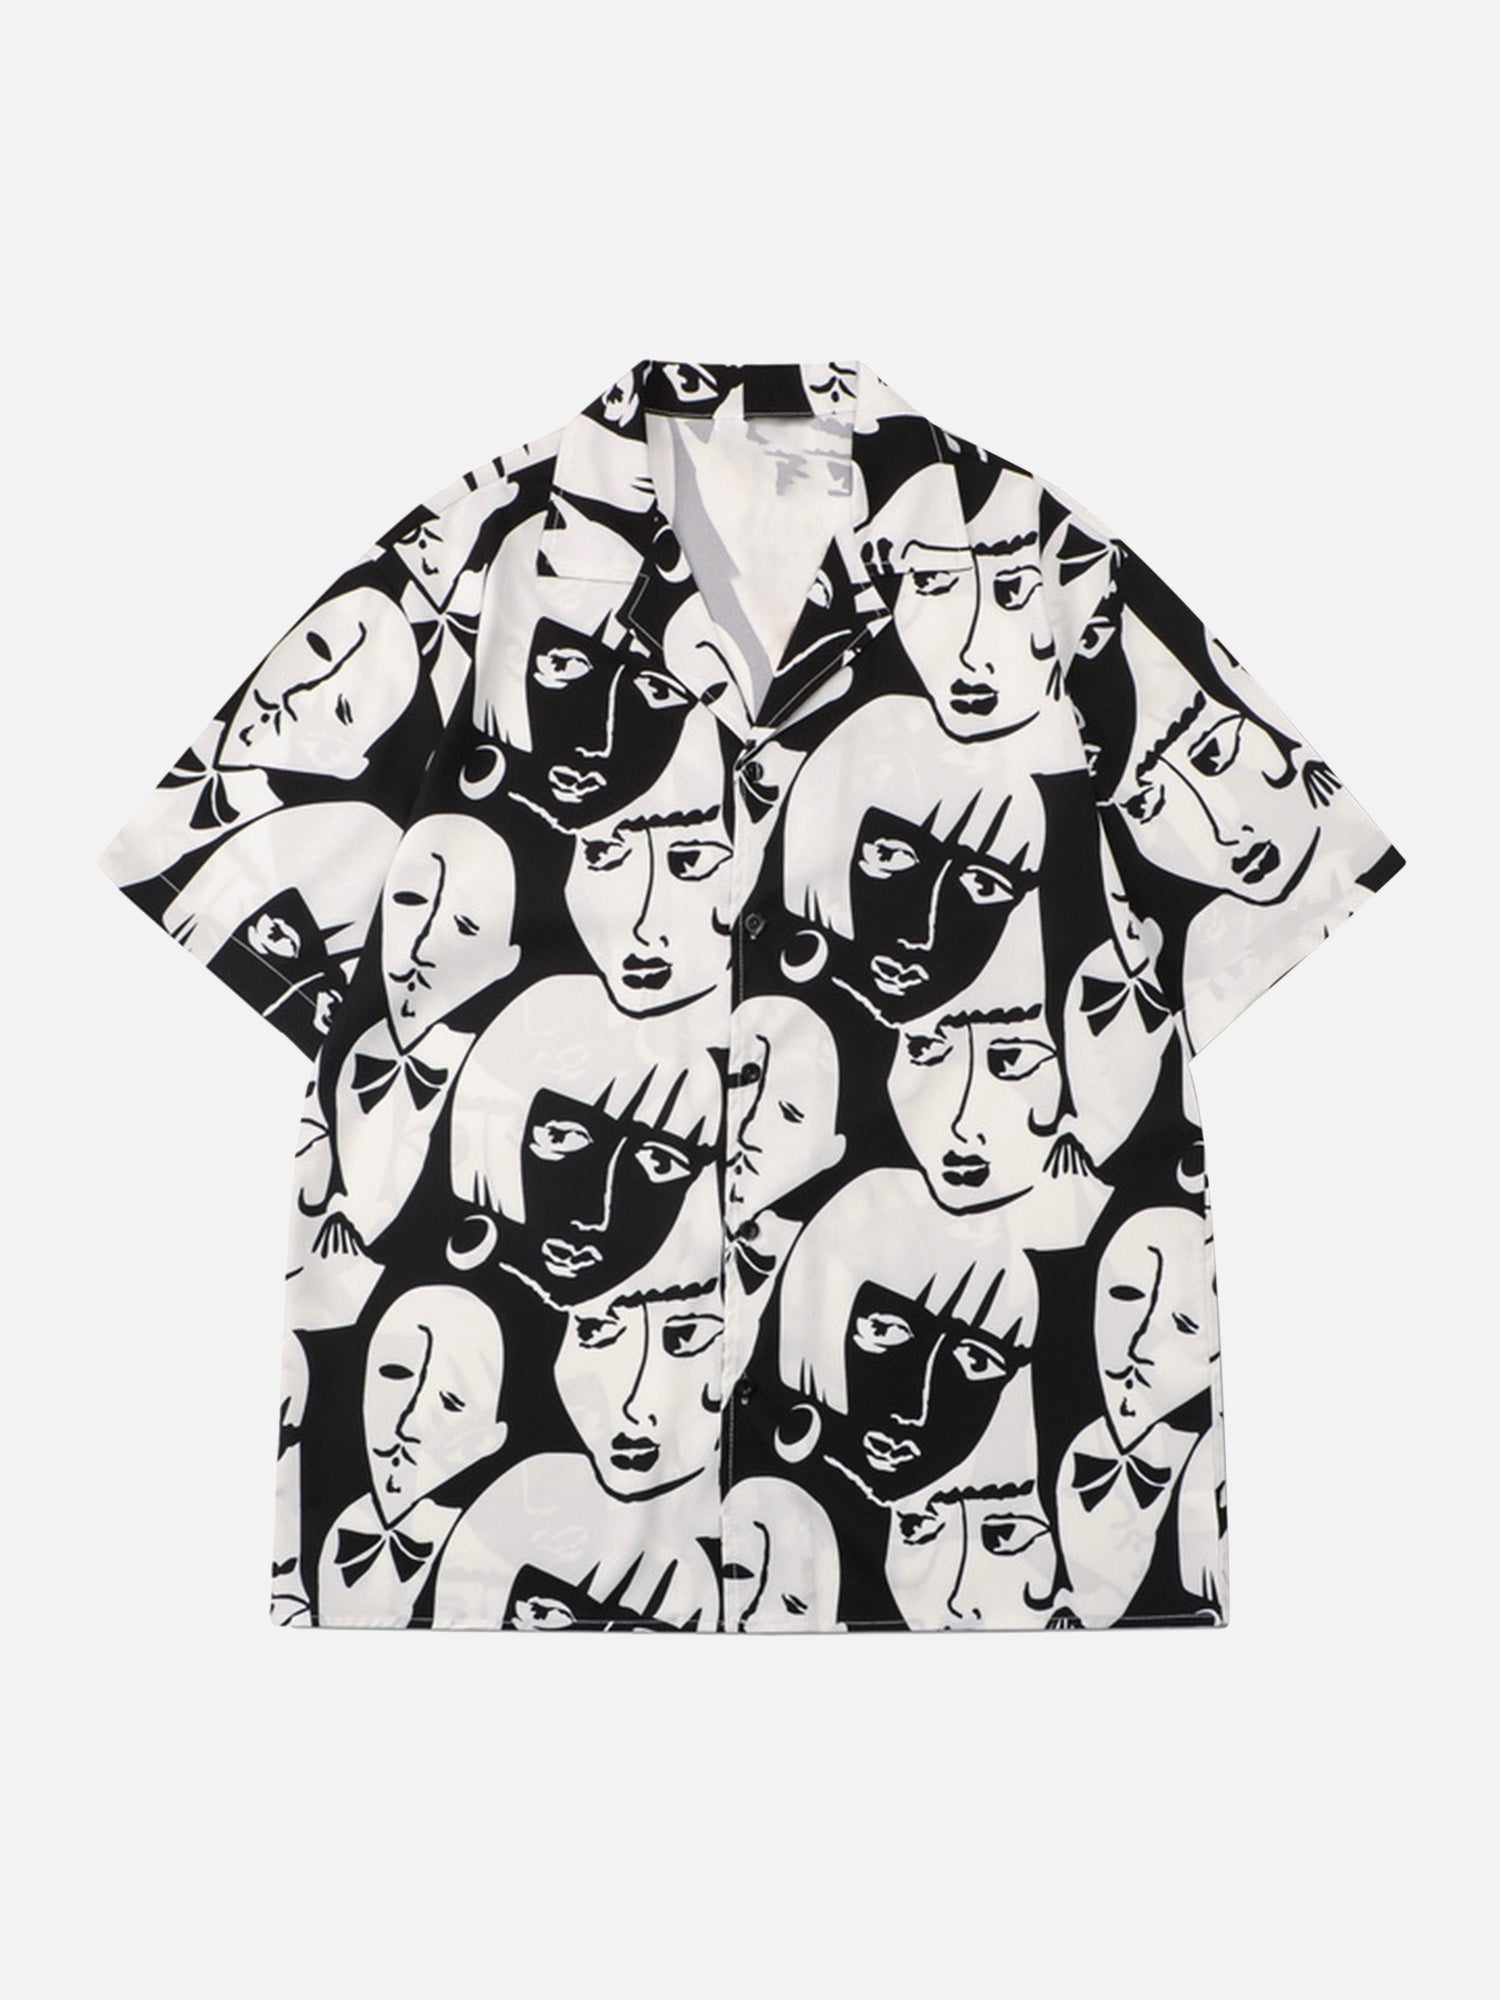 Creative Design Multi-face All-over Printing Shirt Short Set